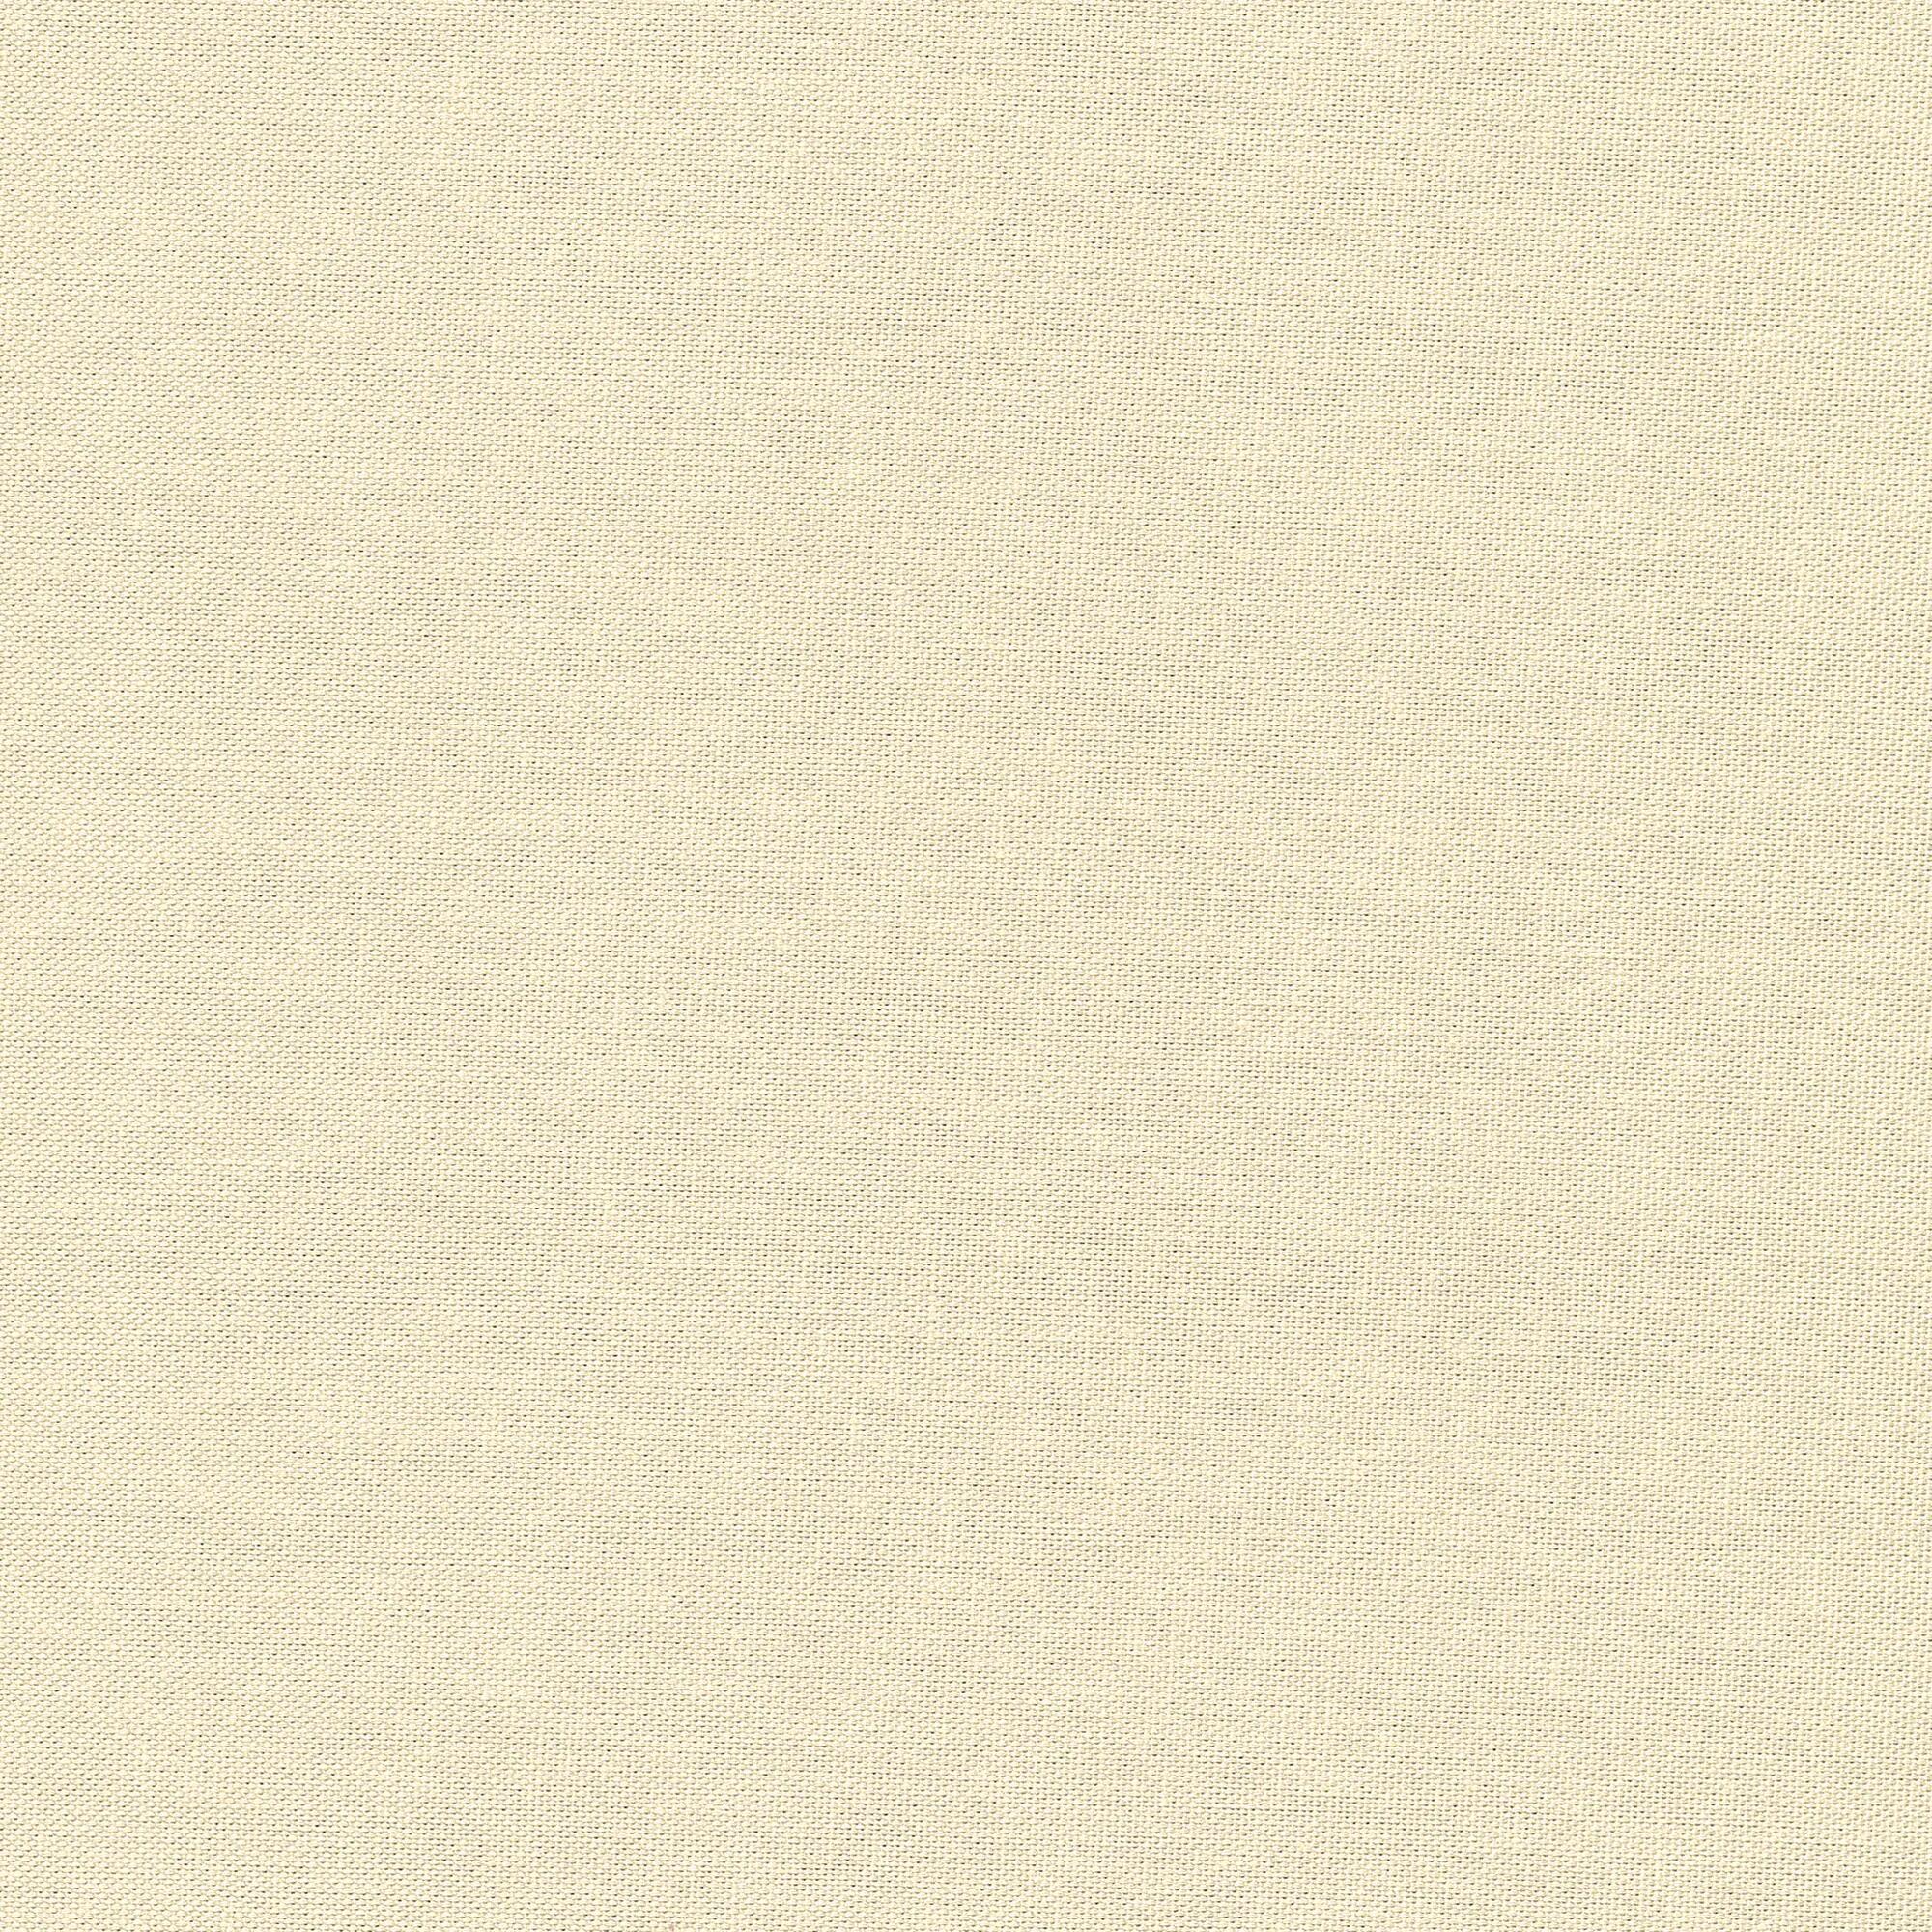 Tela al corte tapicería loneta anna beige ancho 280 cm